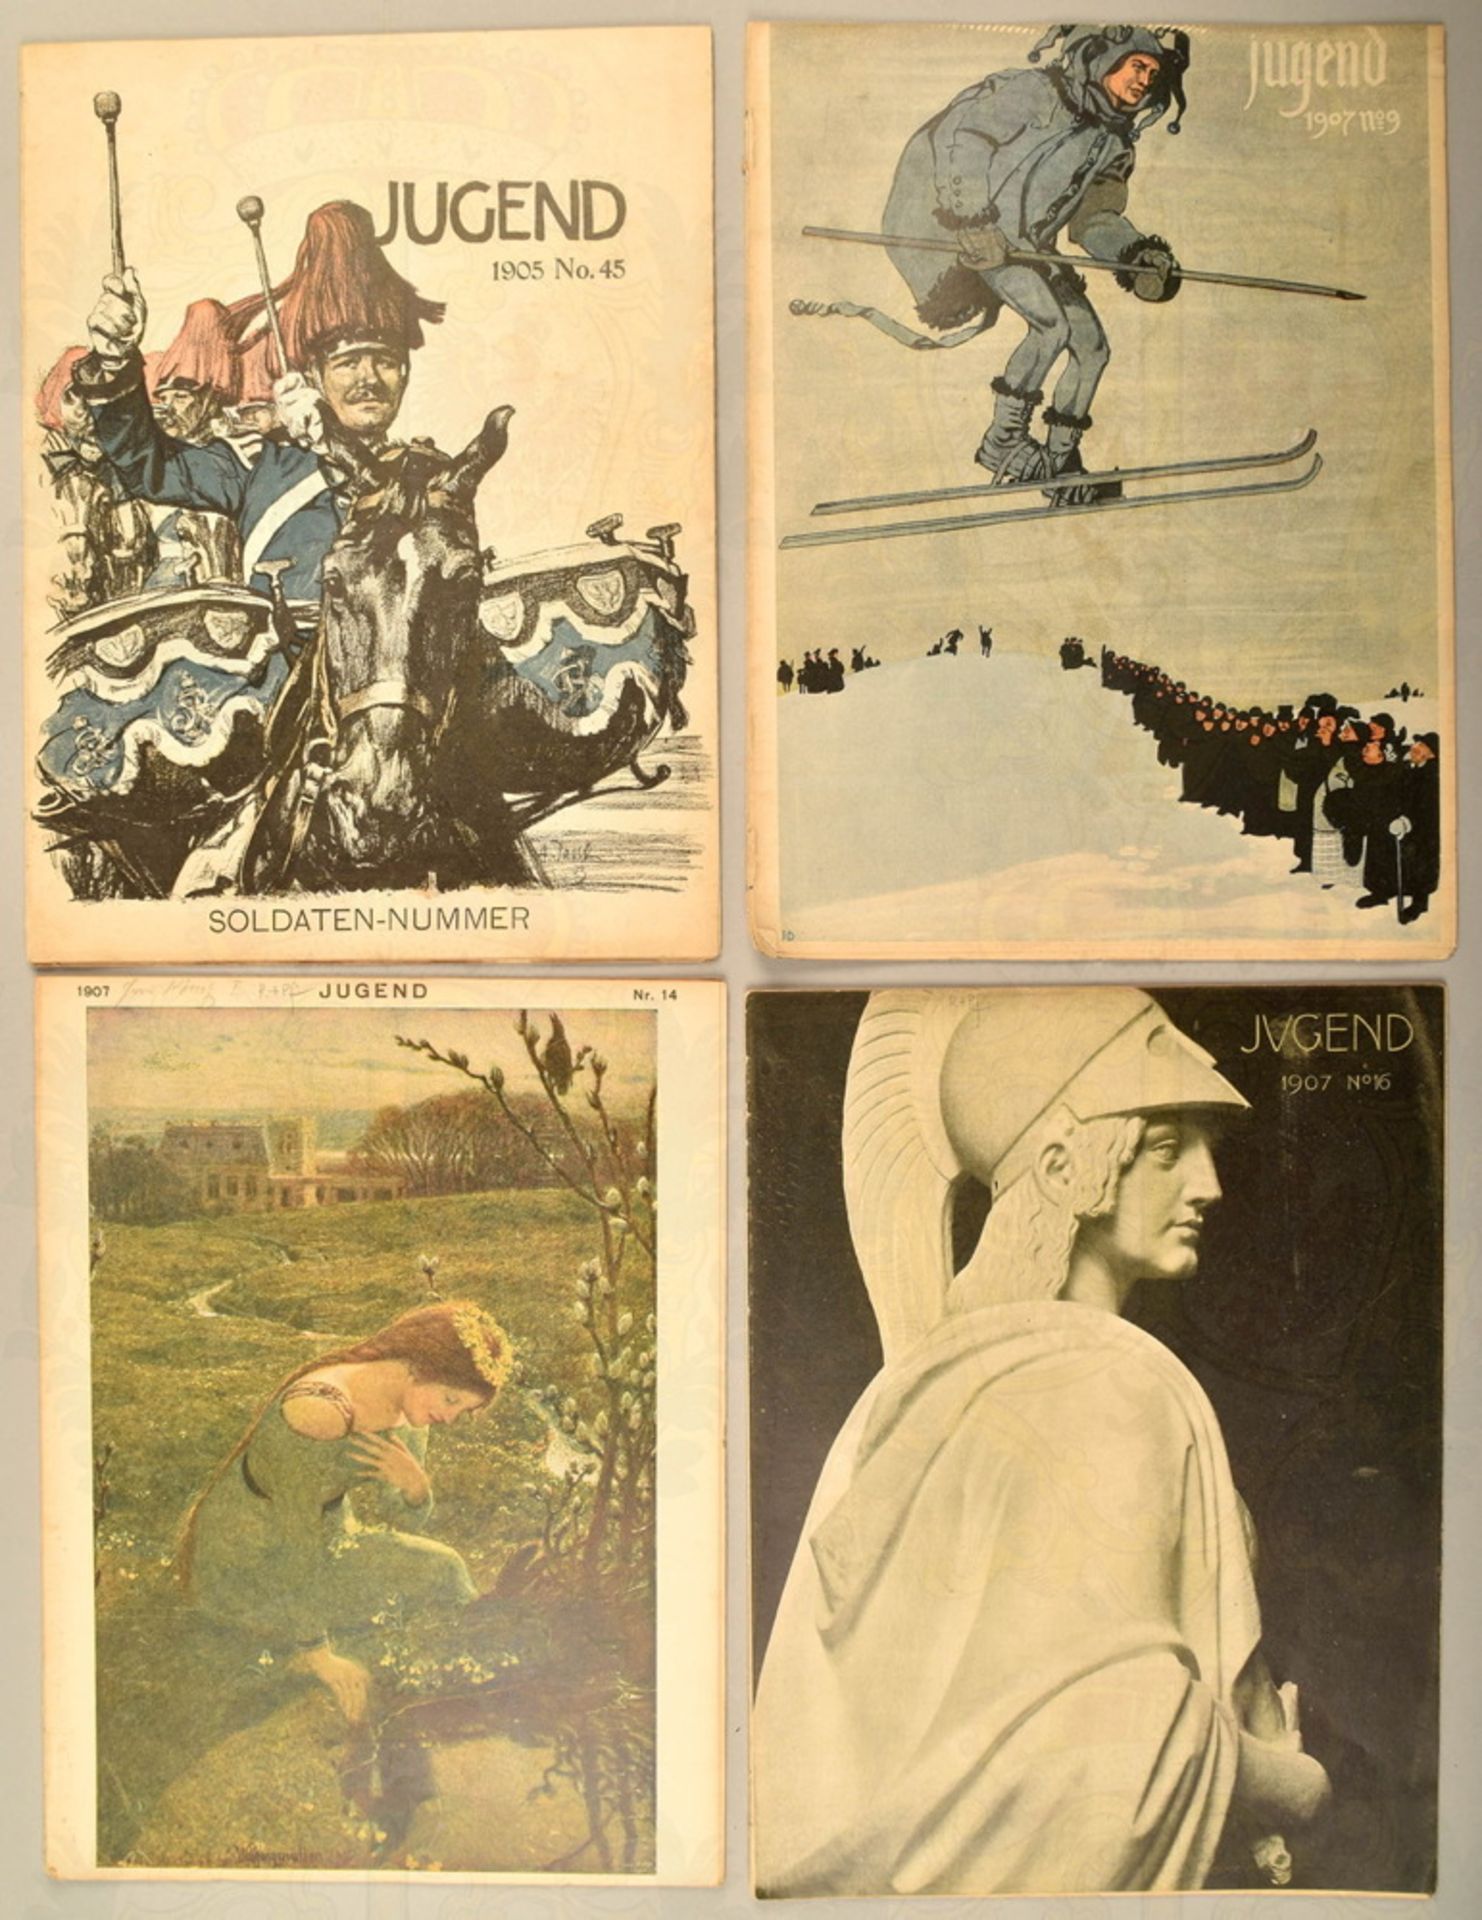 Munich illustrated weekly magazines 1905/1907